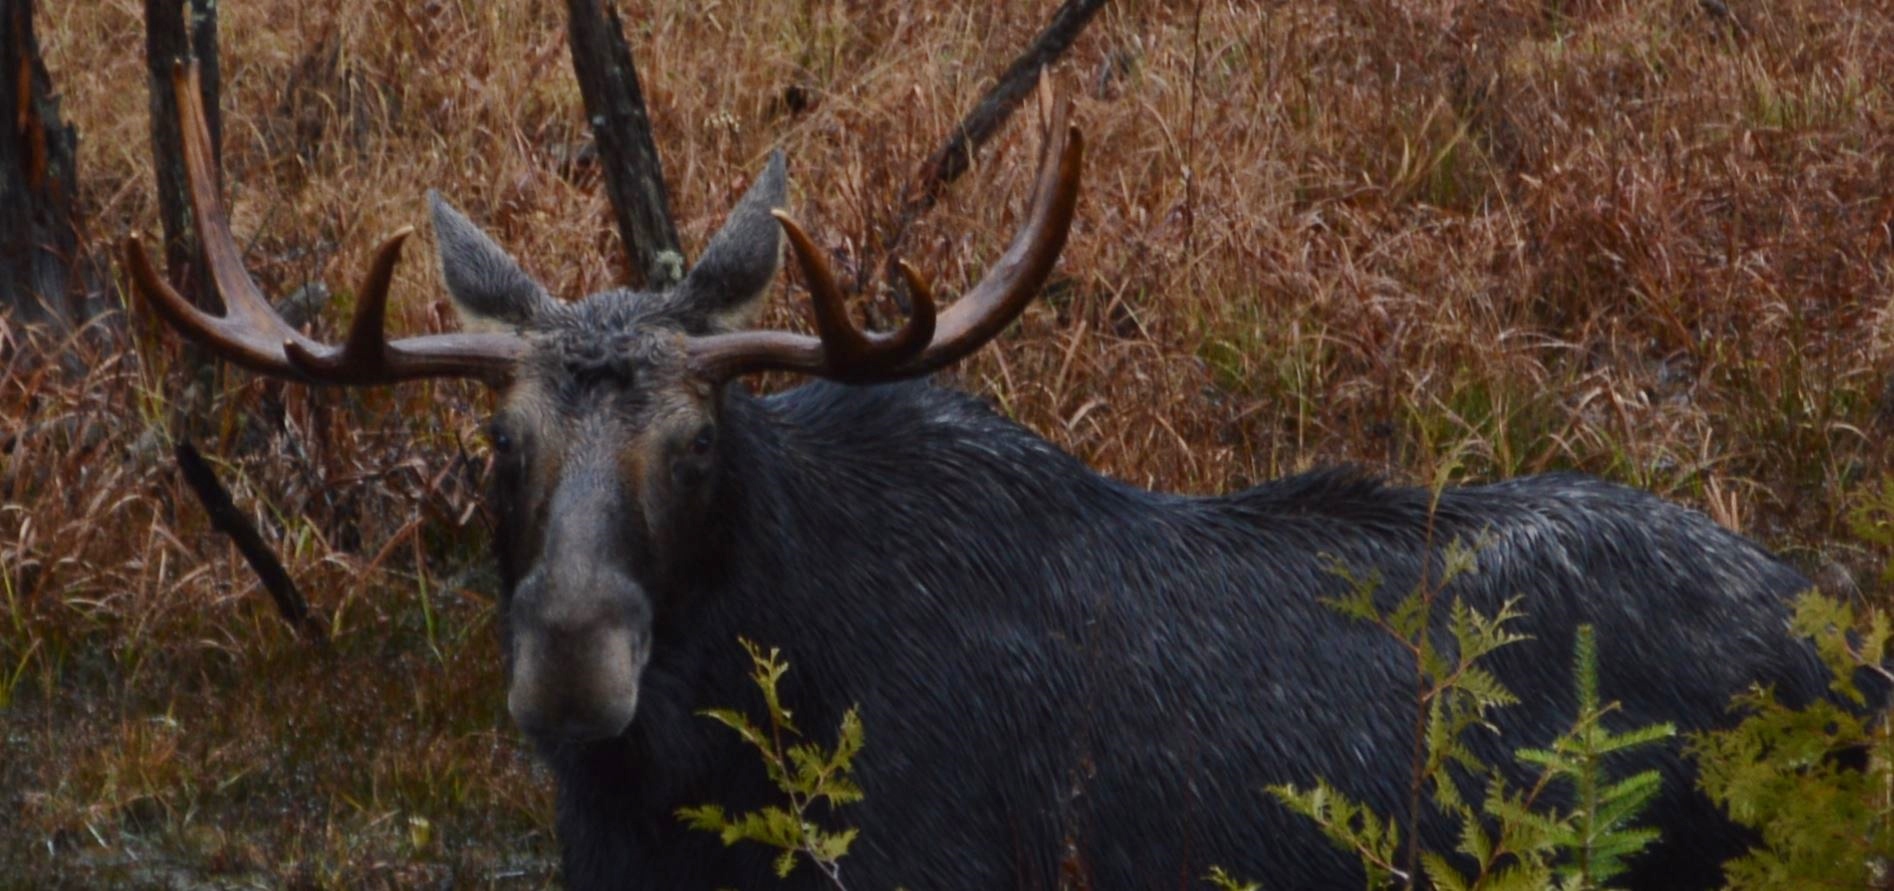 Algonquin Park bull moose, Nov 2014 by Steve Hall